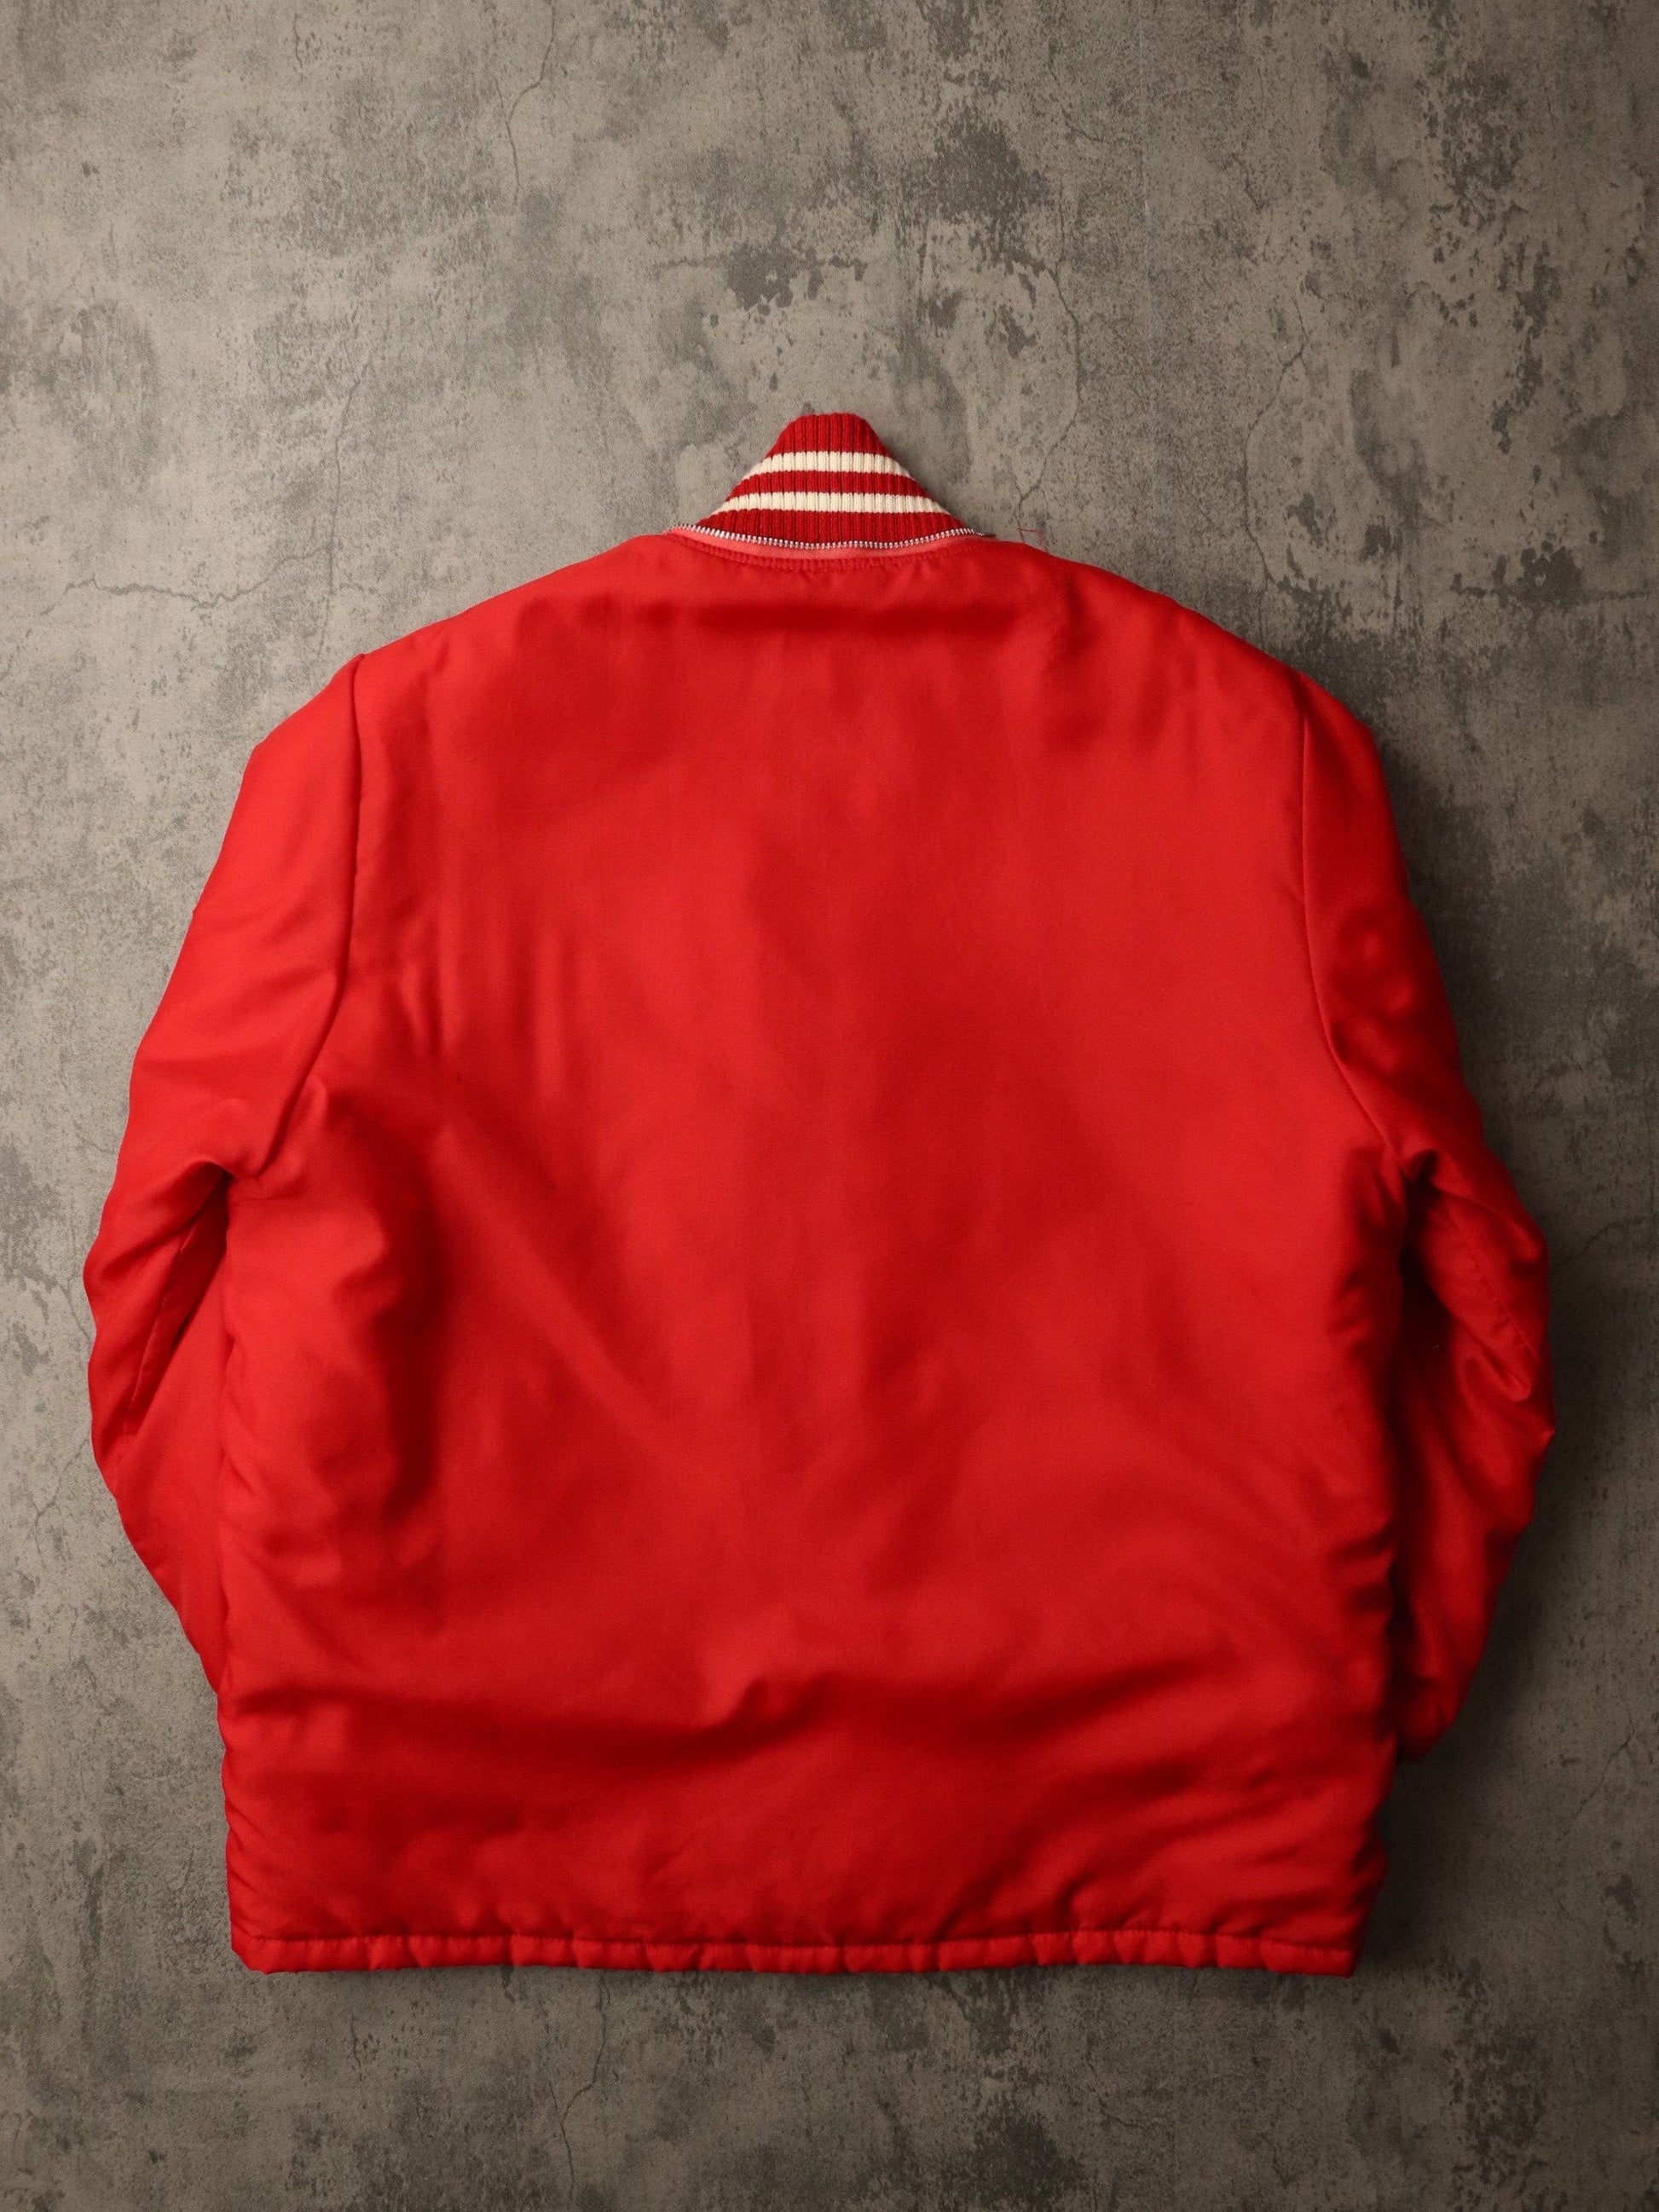 Other Jackets & Coats Vintage Avon Sportswear Jacket Mens Large Red Full Zip Coat